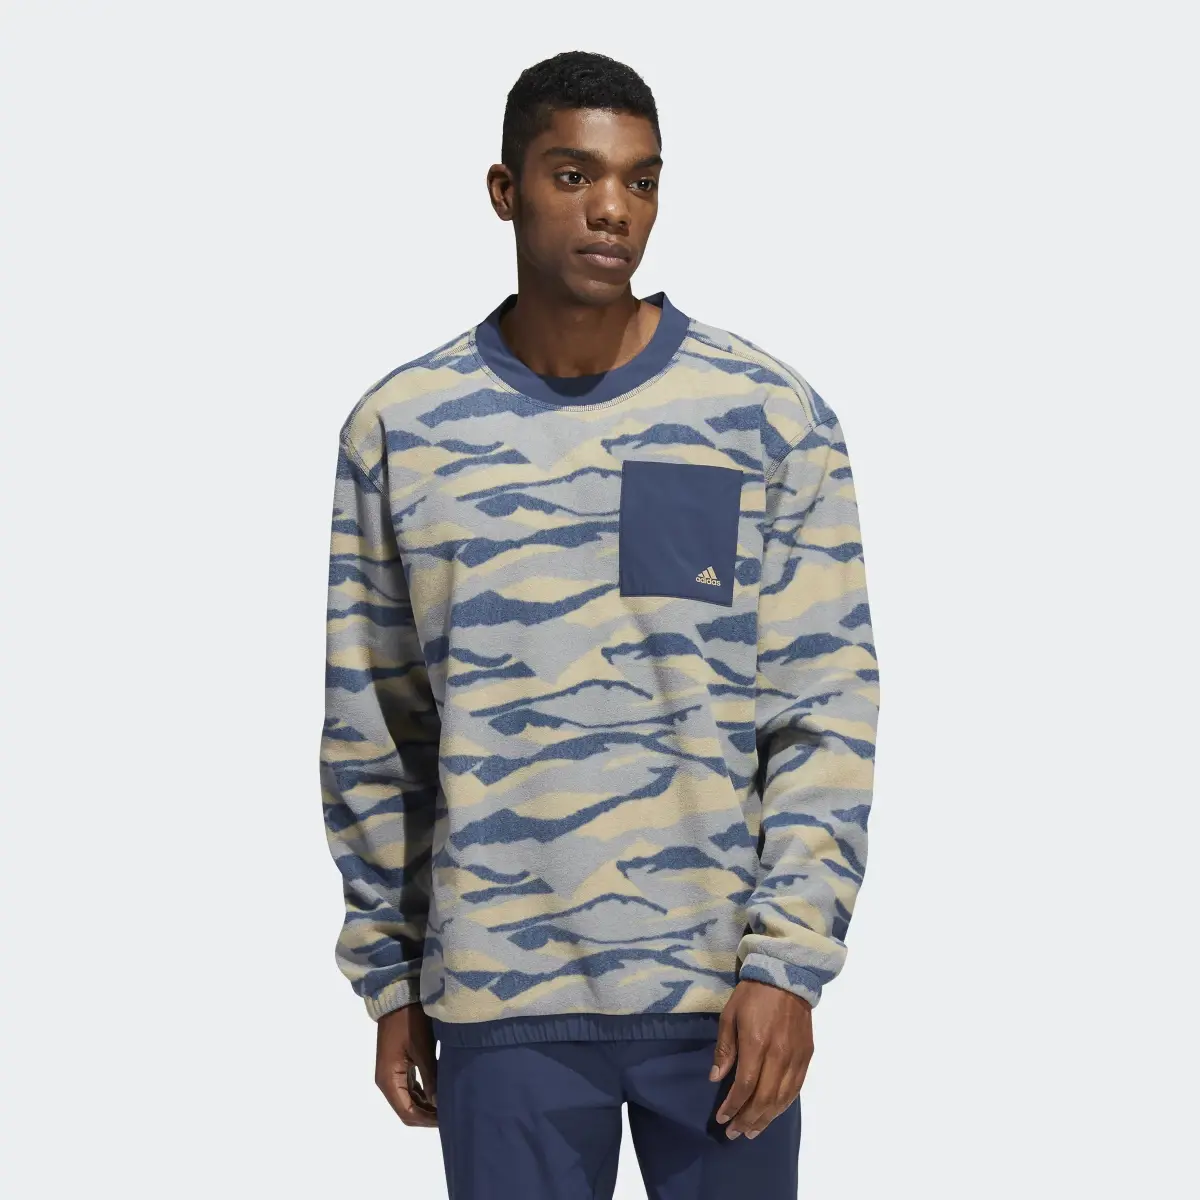 Adidas Texture-Print Crew Sweatshirt. 2